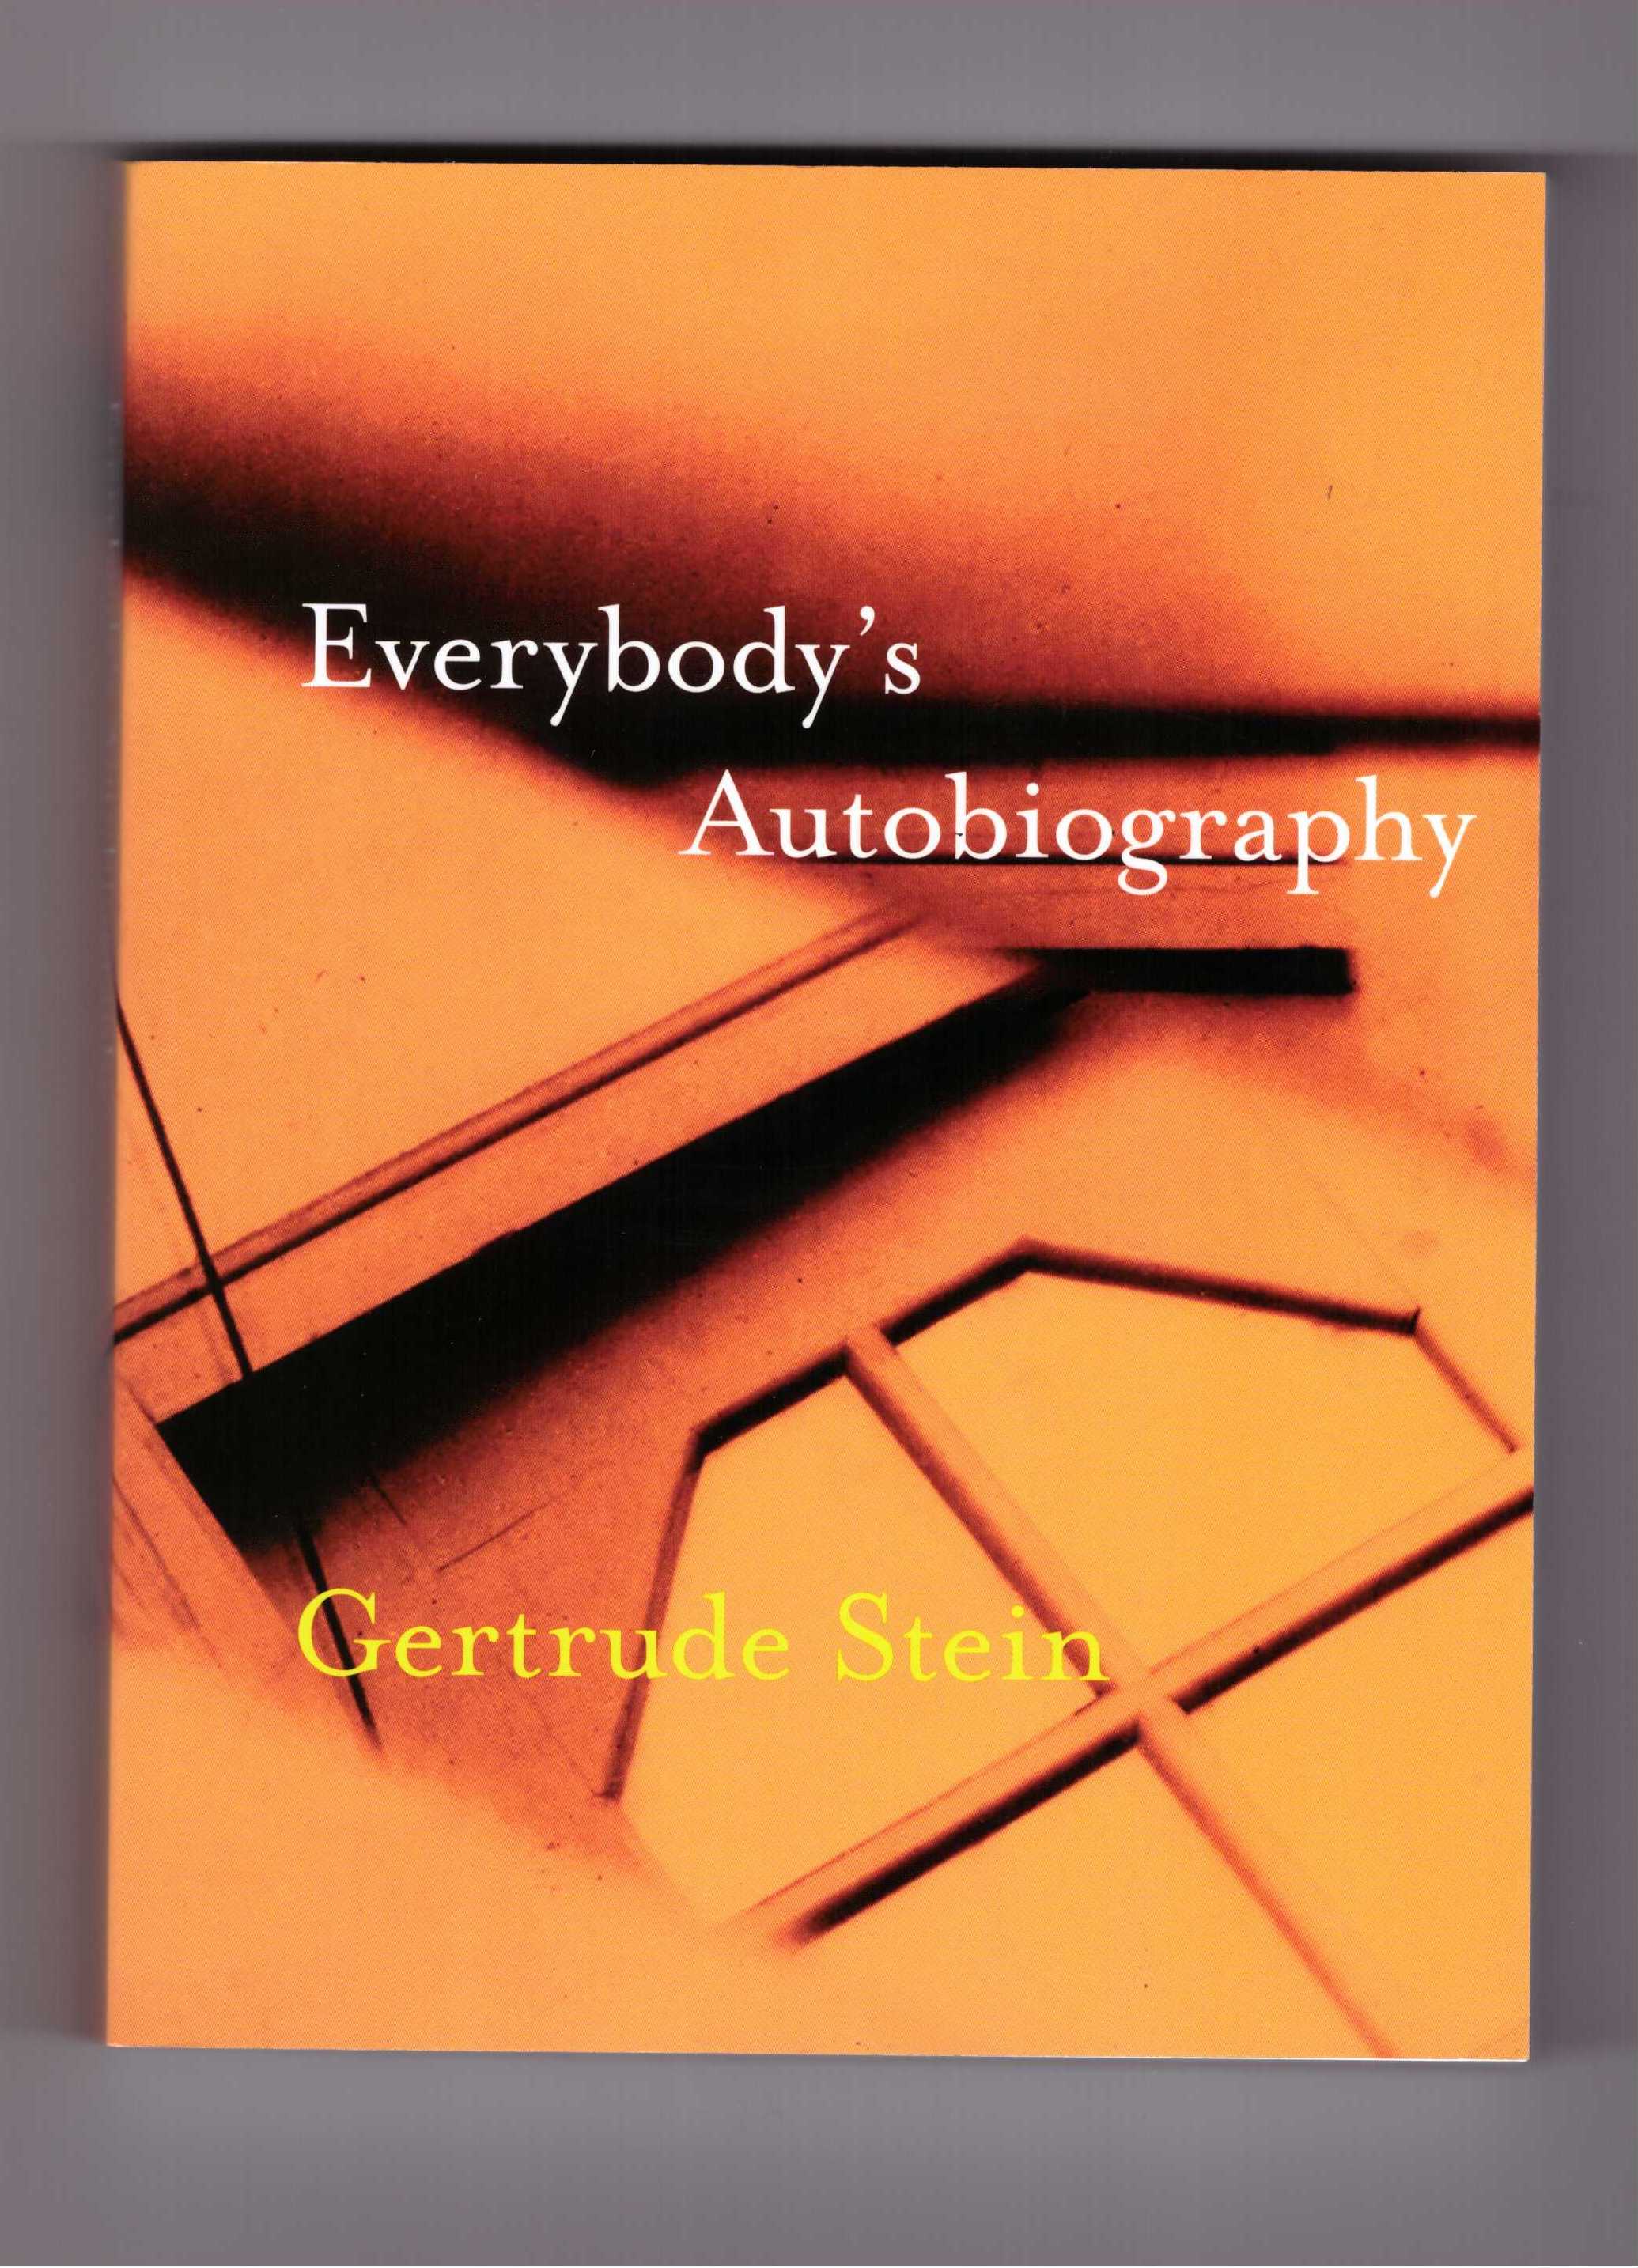 STEIN, Gertrude - Everybody's Autobiography